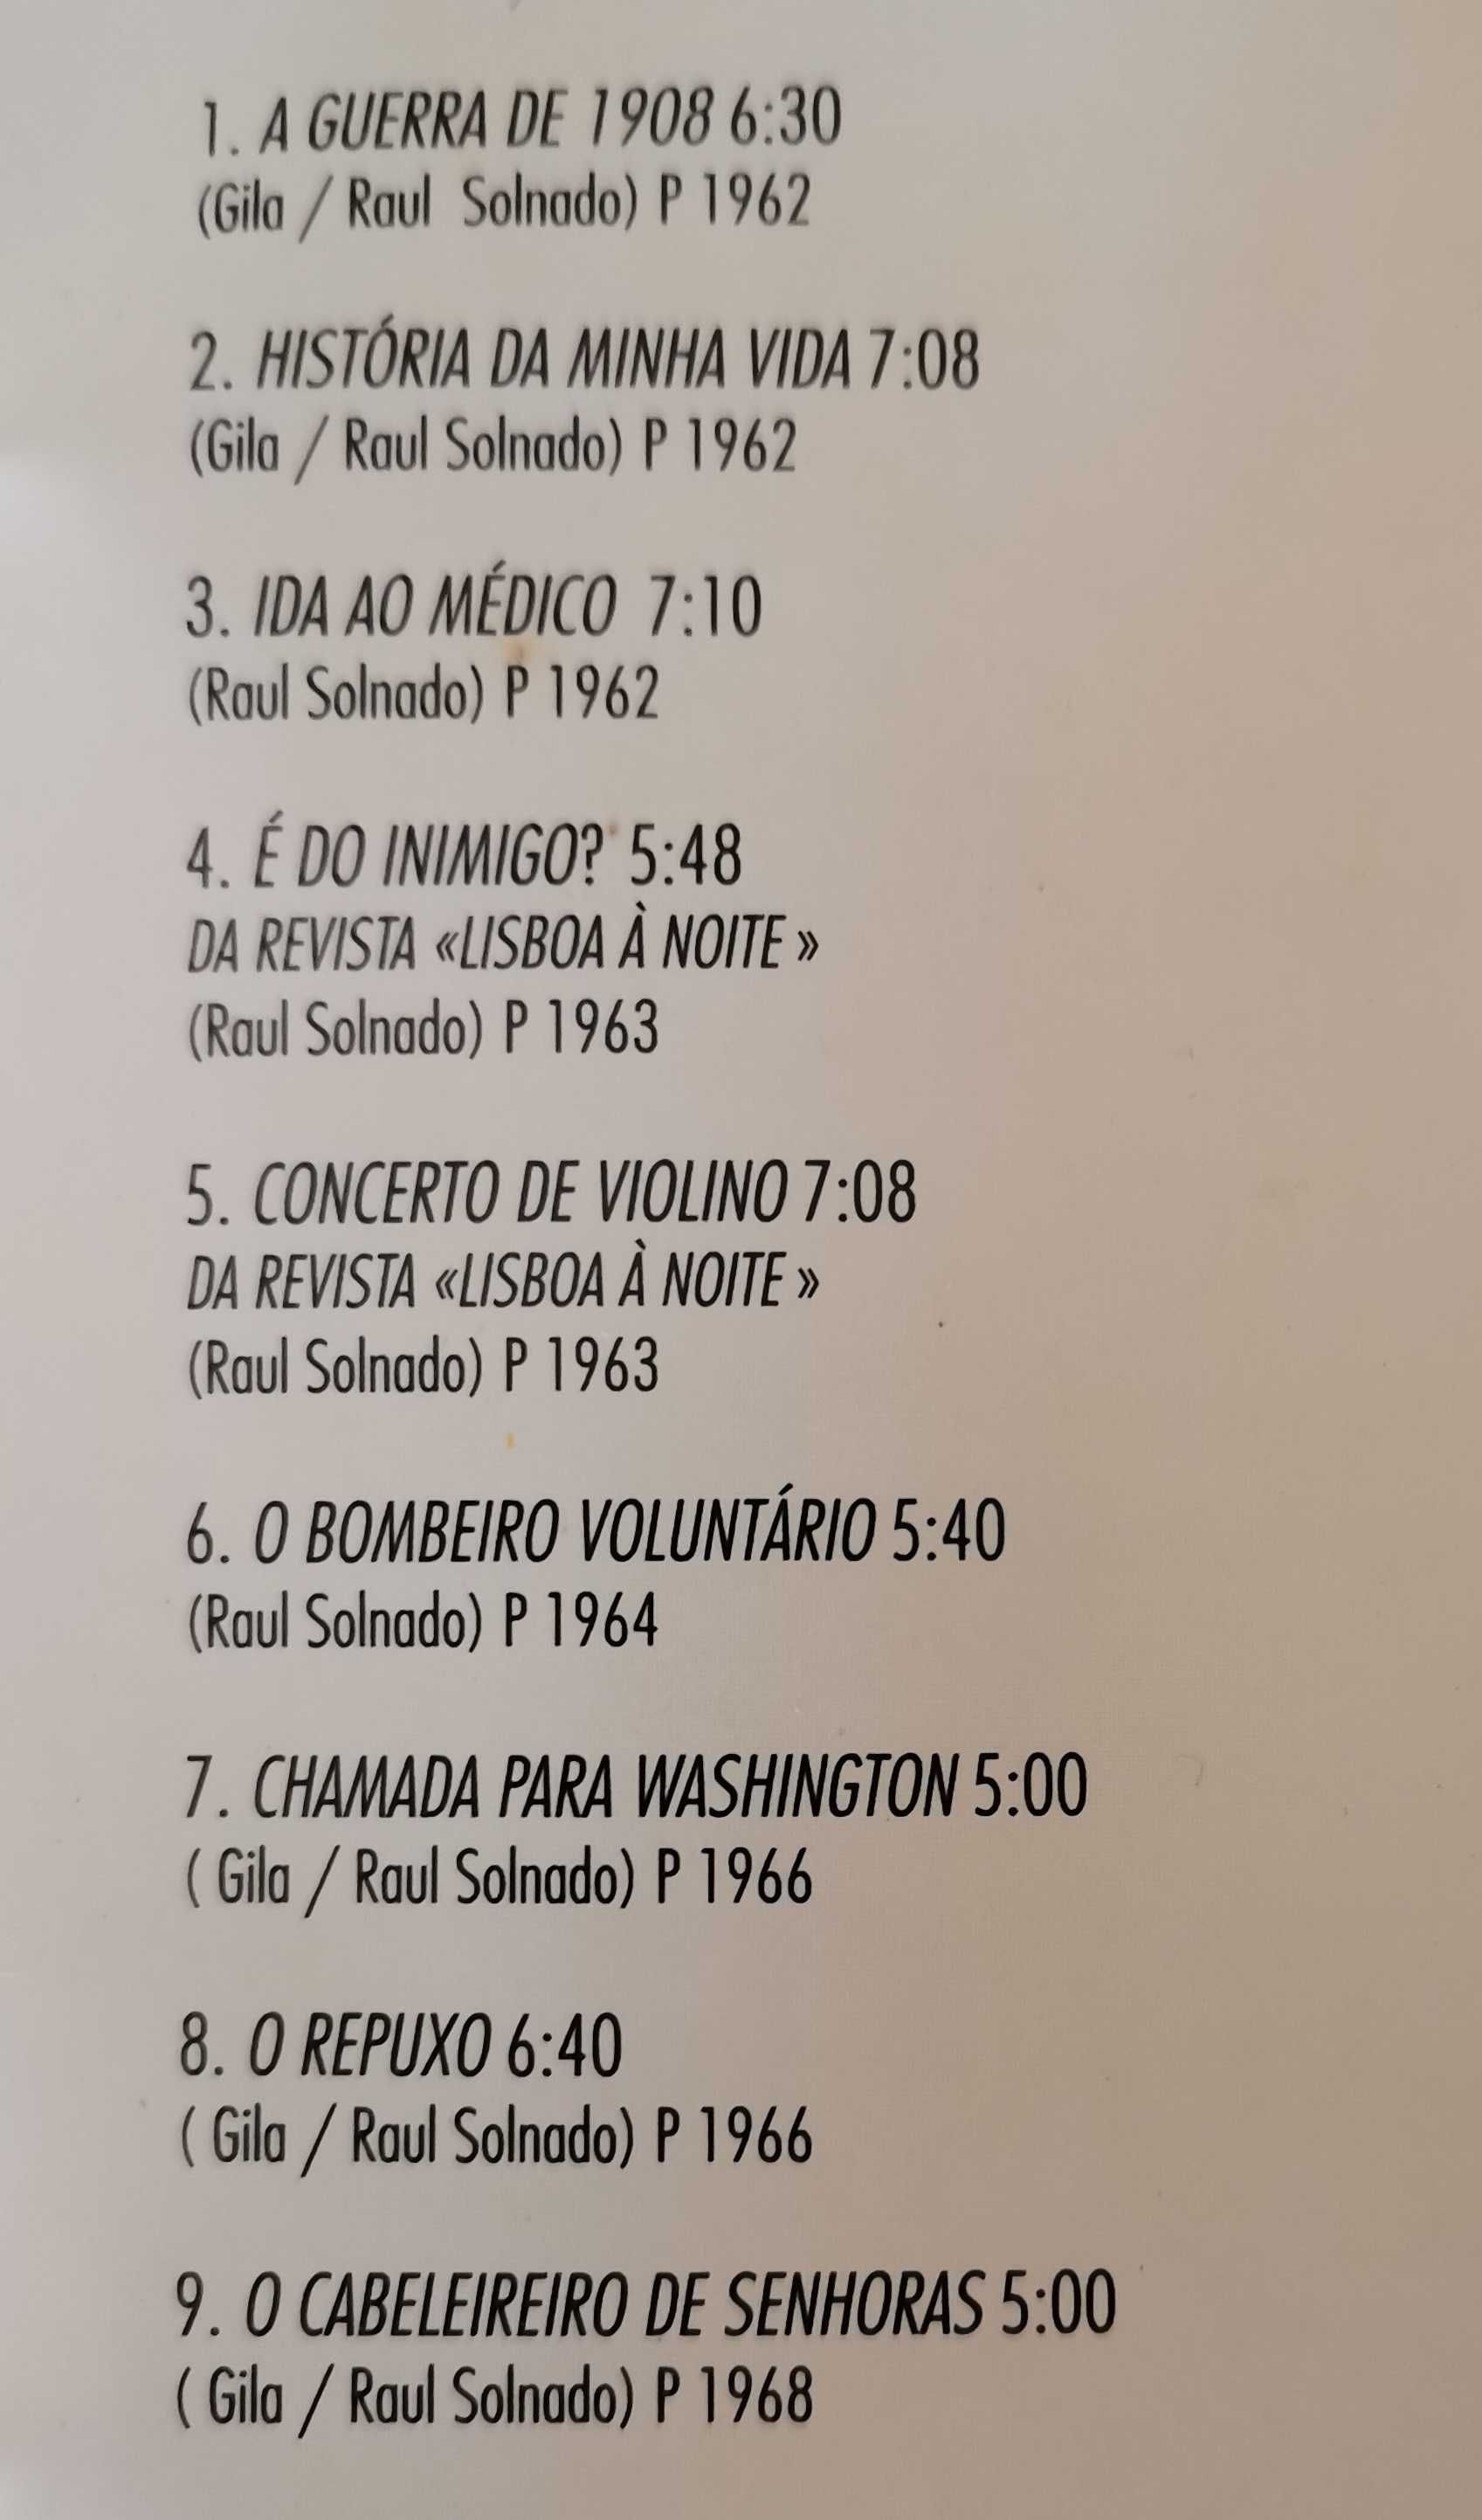 CD Raul Solnado - Best-seller dos discos